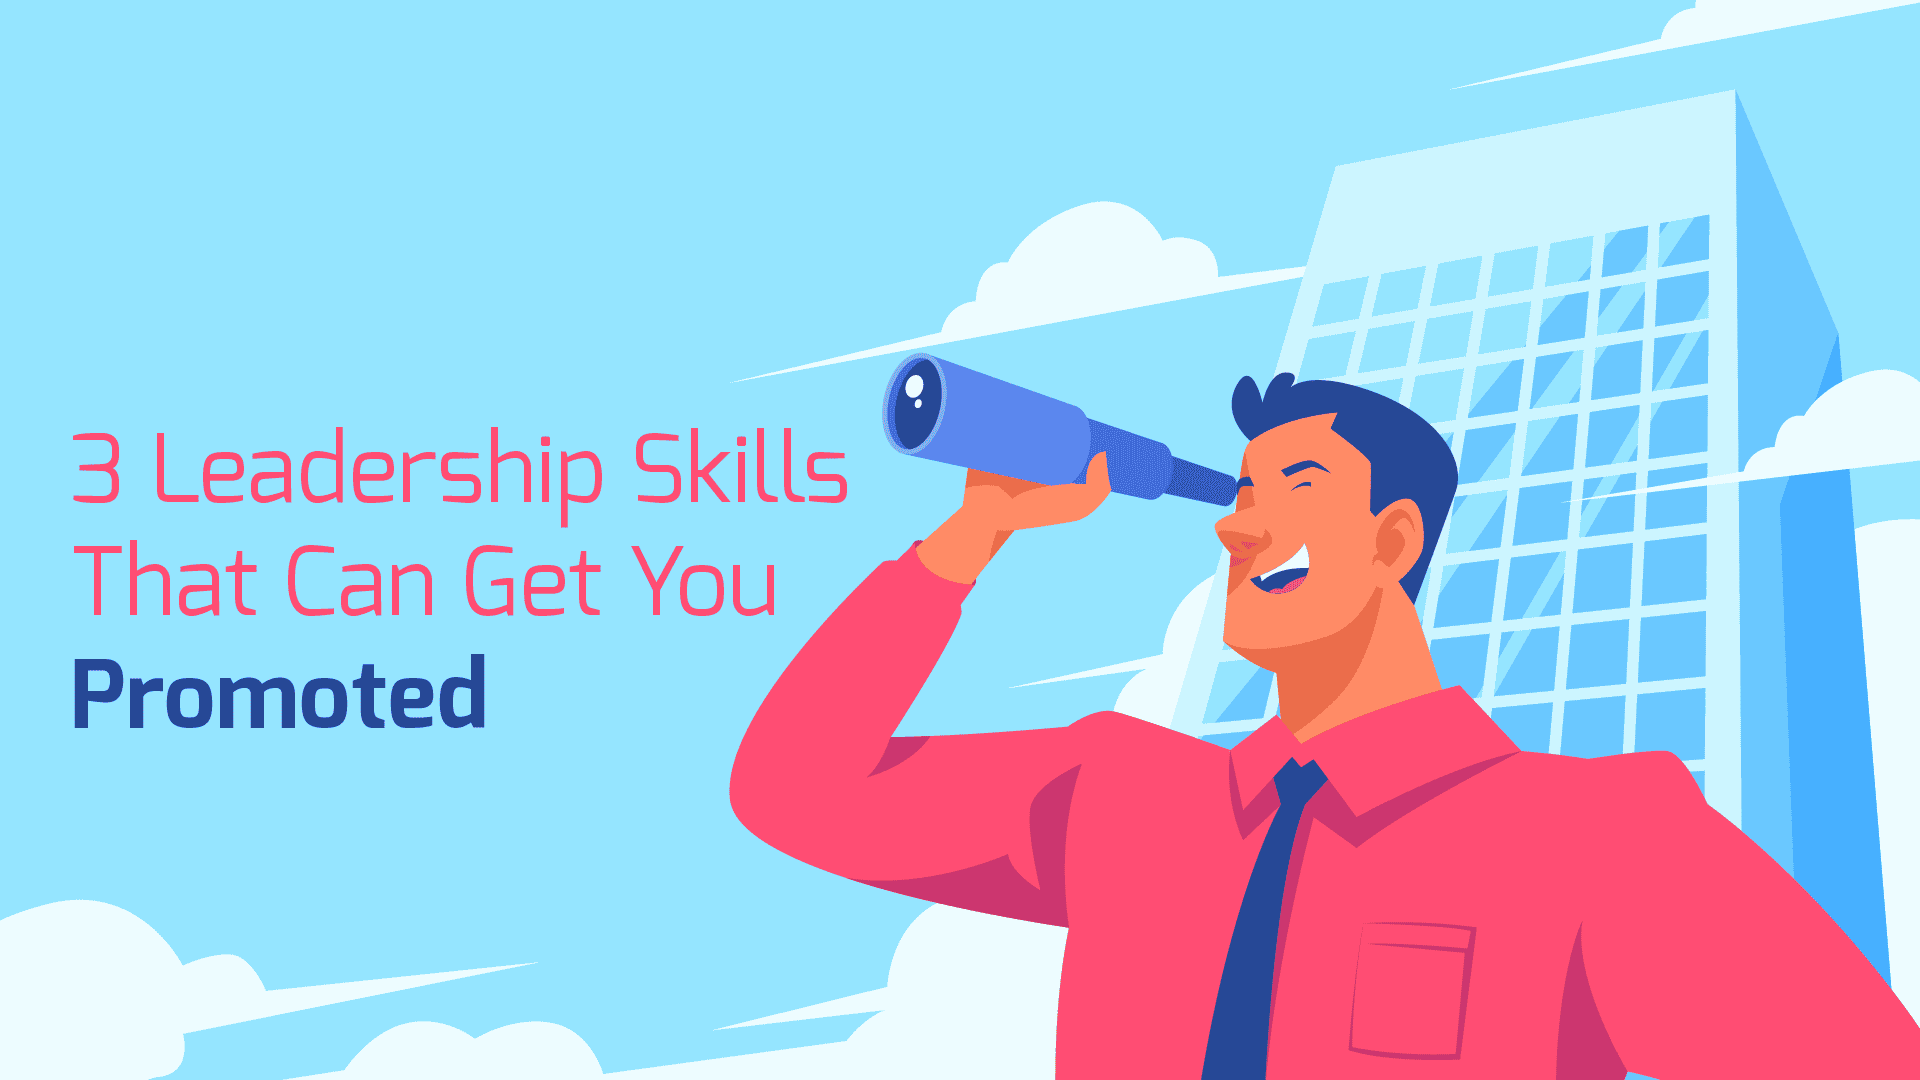 Leadership skills for career advancement